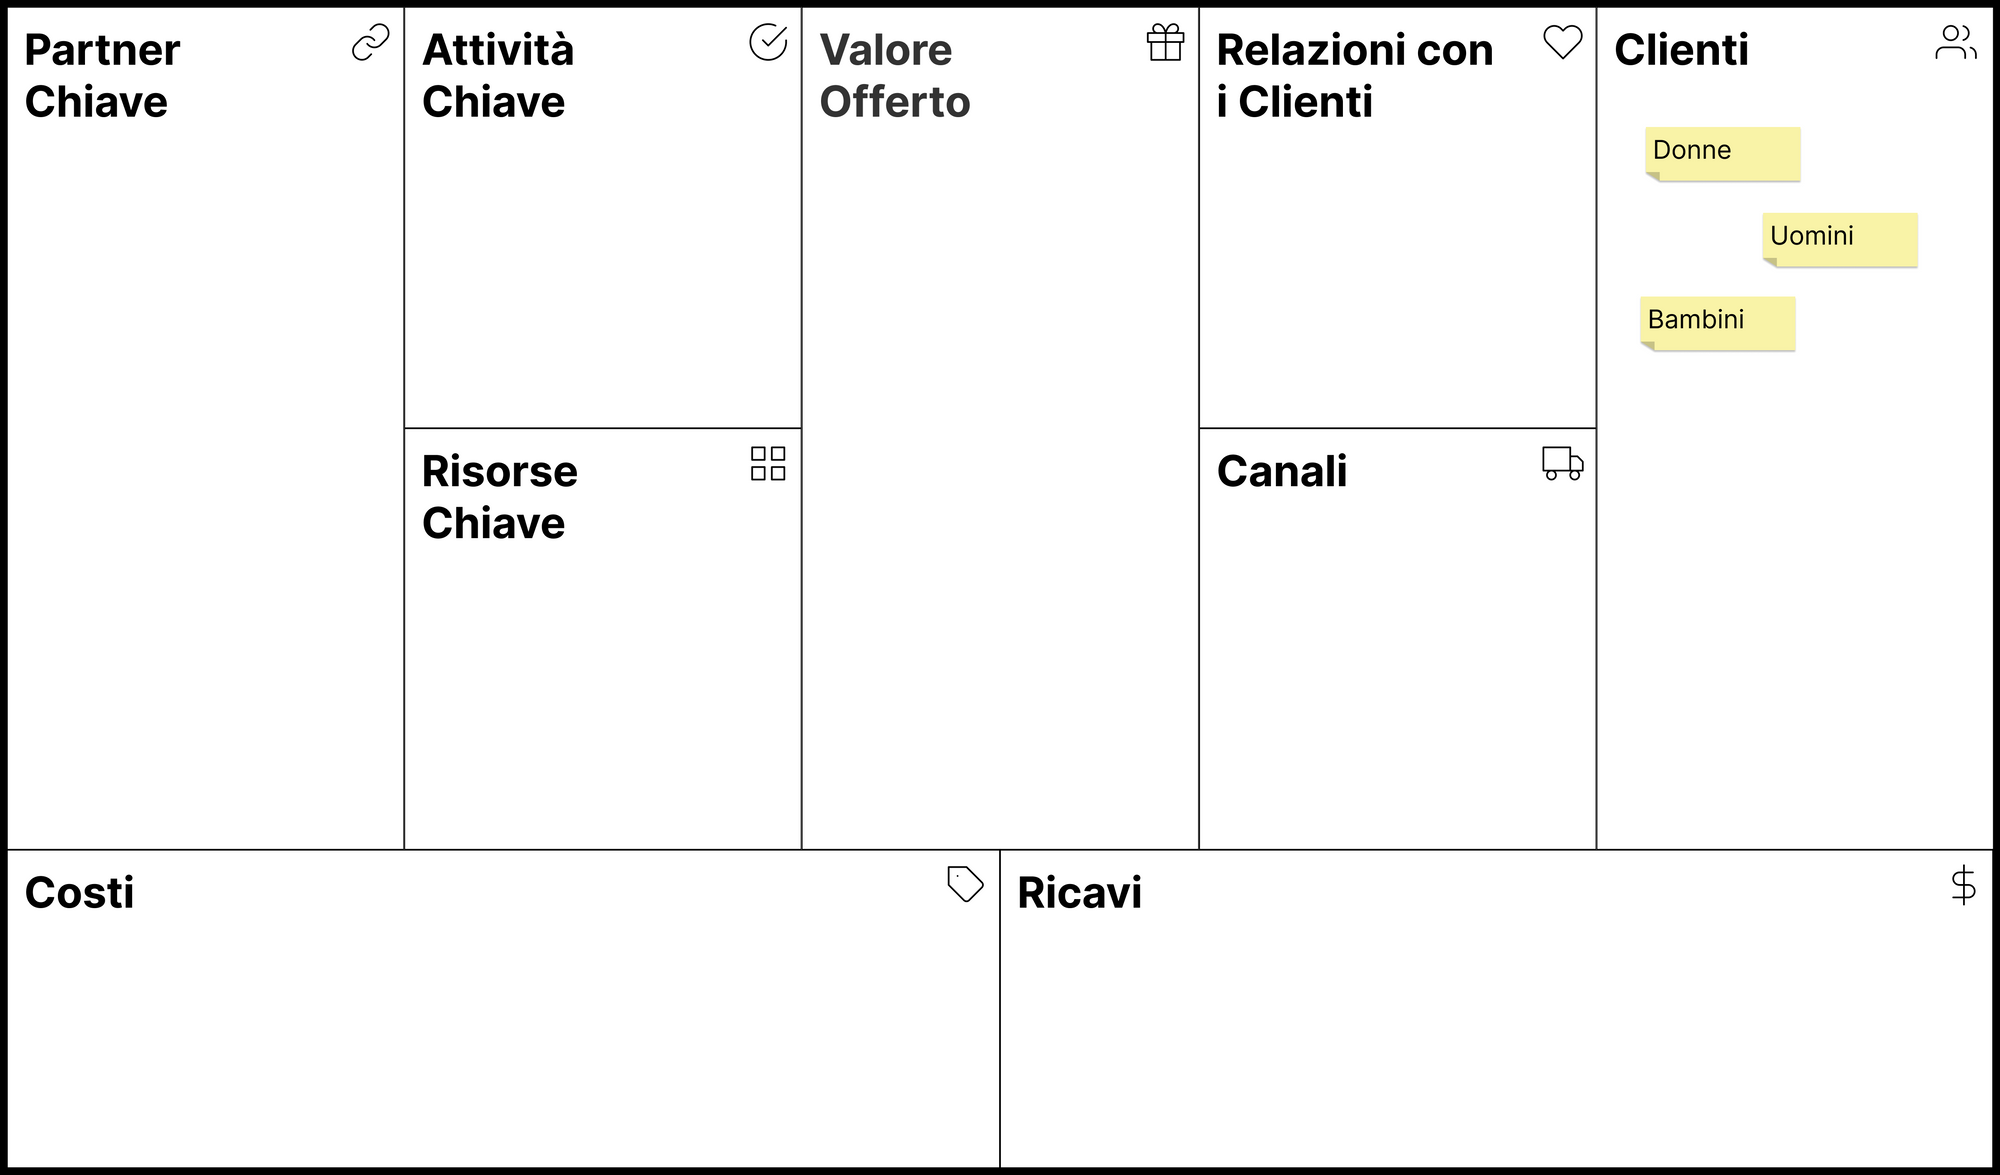 Business Model Canvas - Clienti